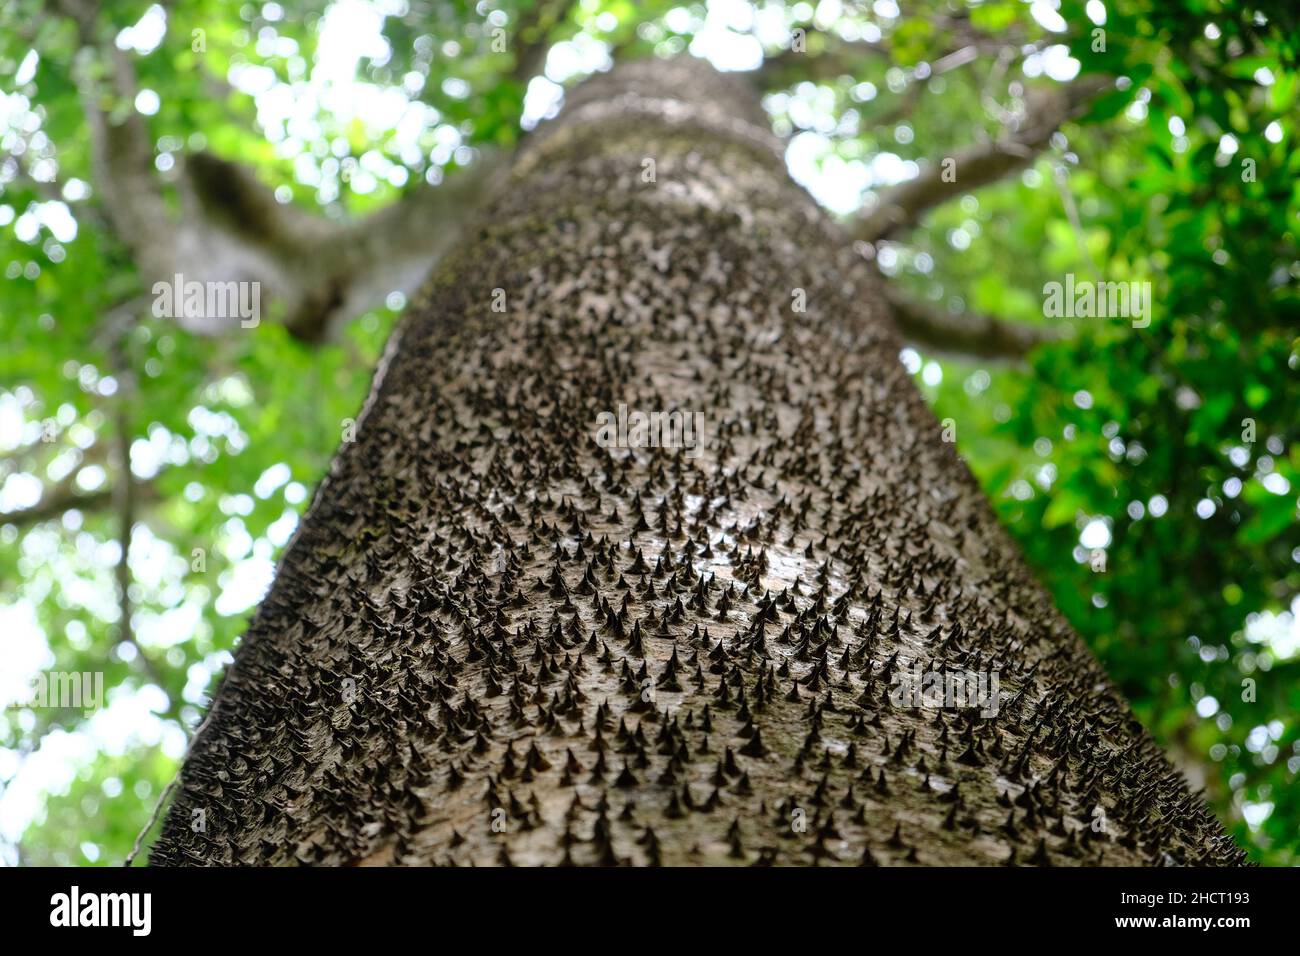 Costa Rica Rincon de la Vieja National Park - Ceiba pentandra or the Kapok with thorns on trunk Stock Photo